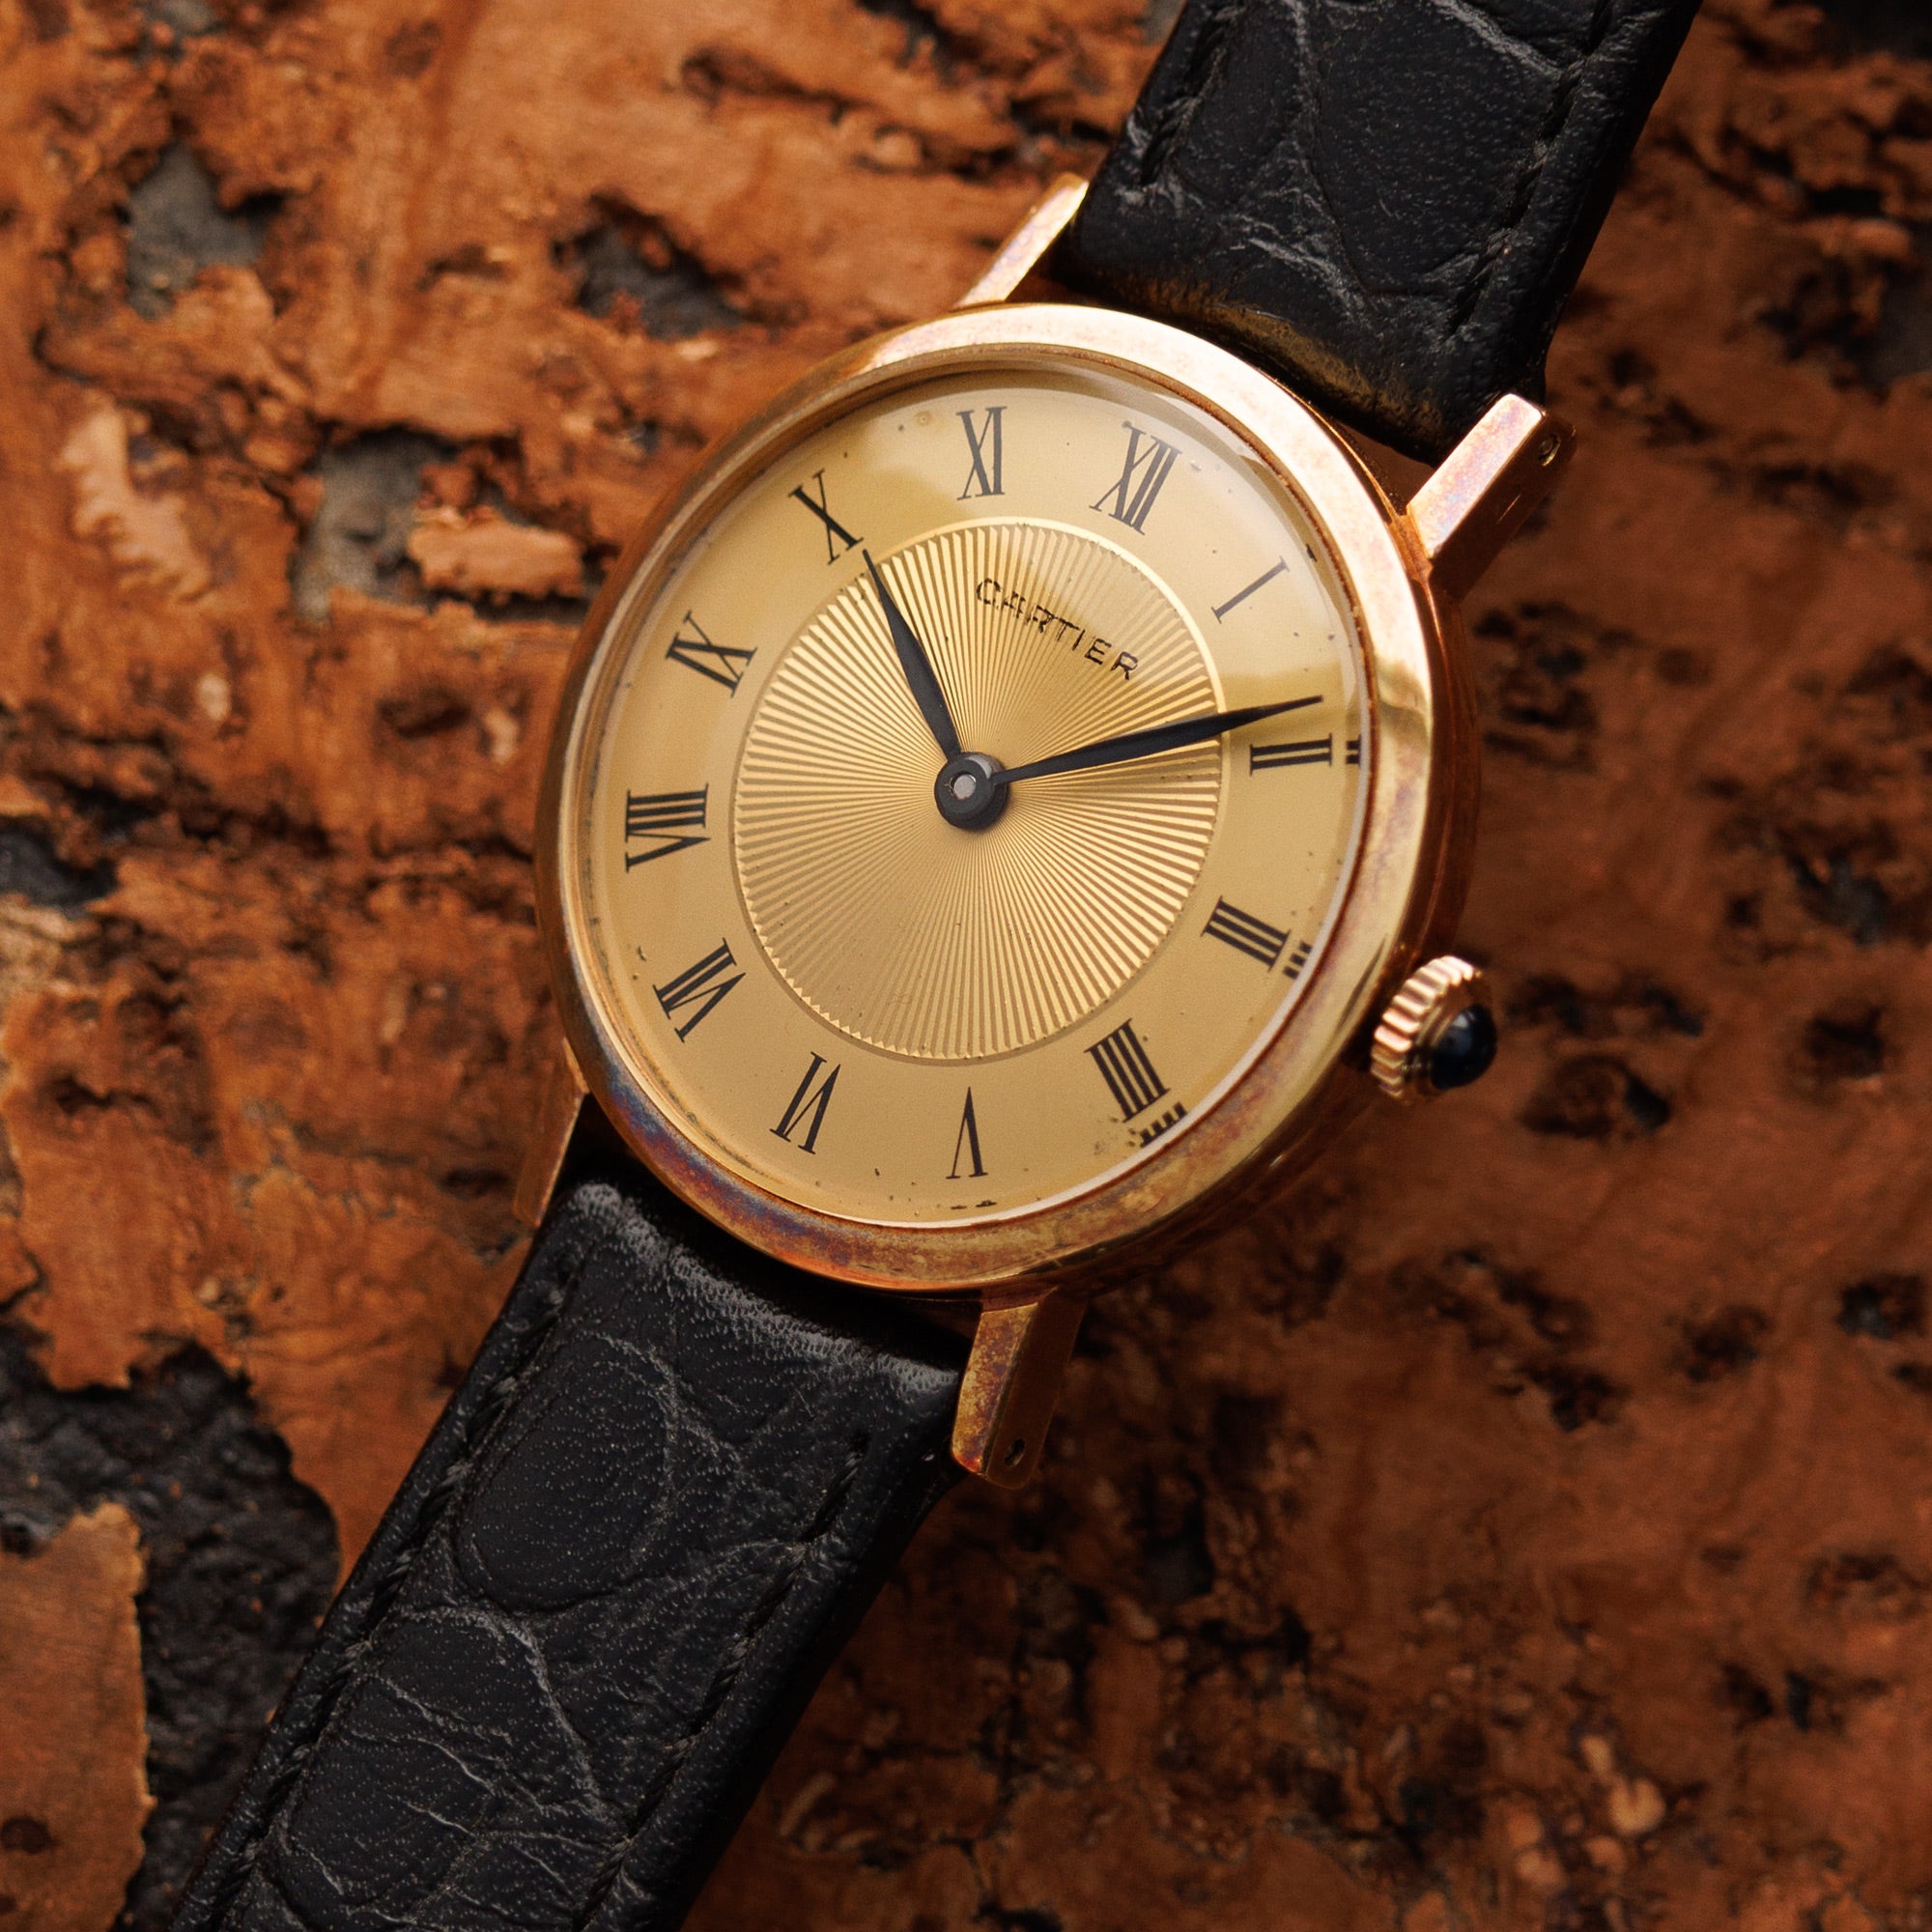 Cartier - Cartier Yellow Gold Mechanical Watch - The Keystone Watches